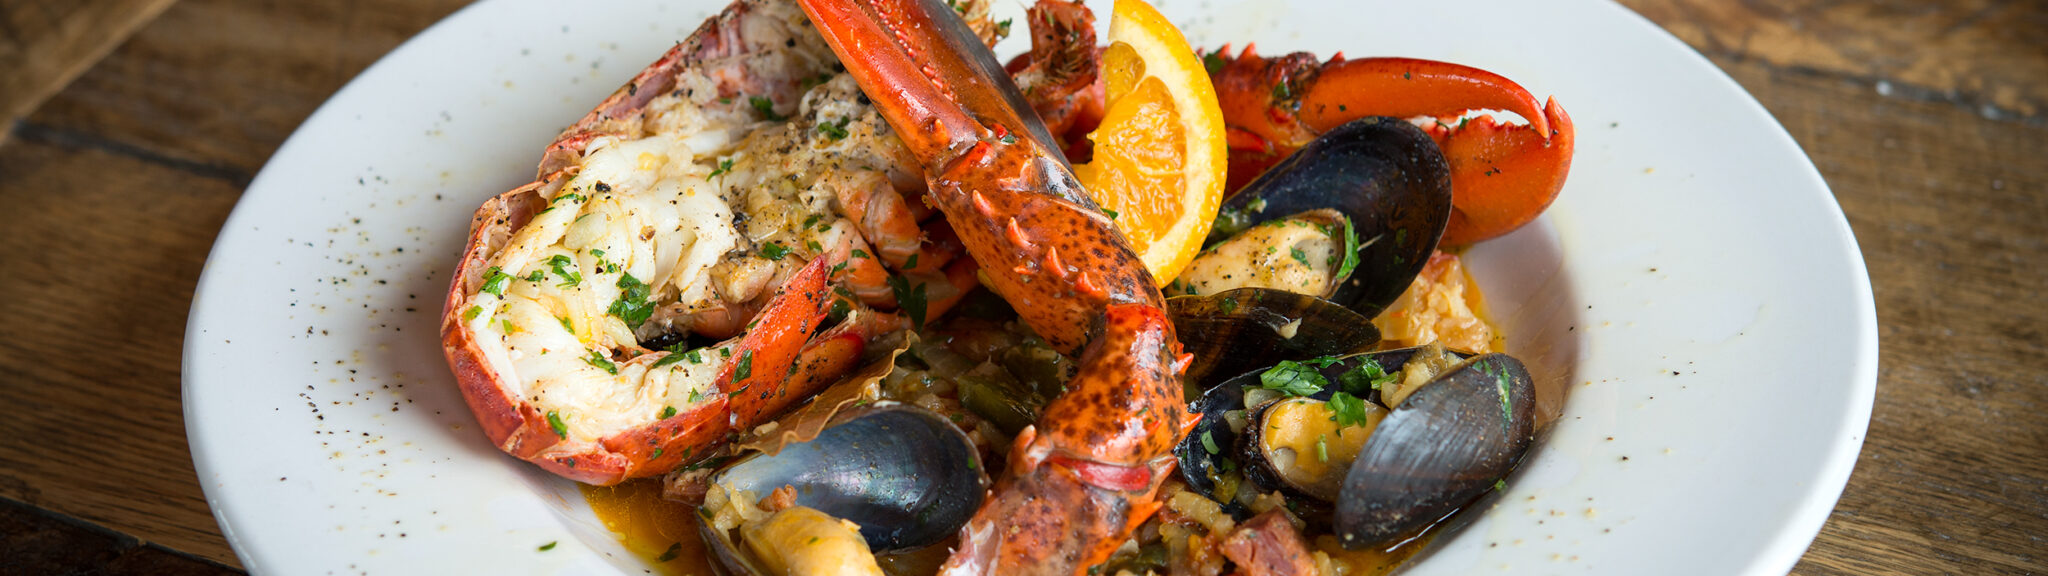 Maine Lobster Paella recipe image